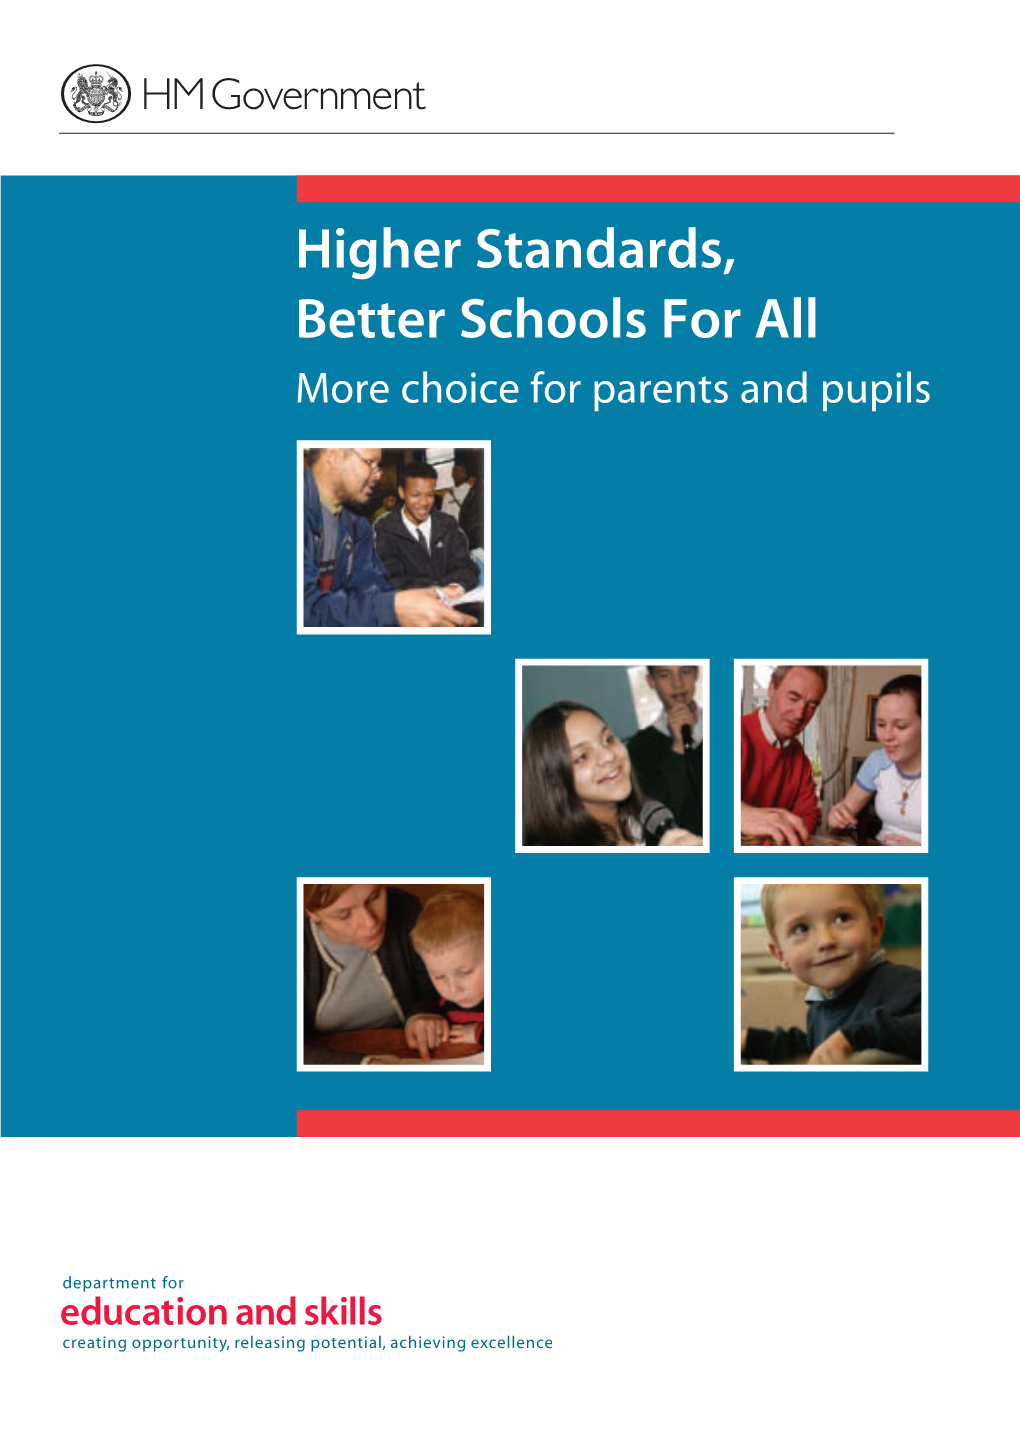 Higher Standards, Better Schools For